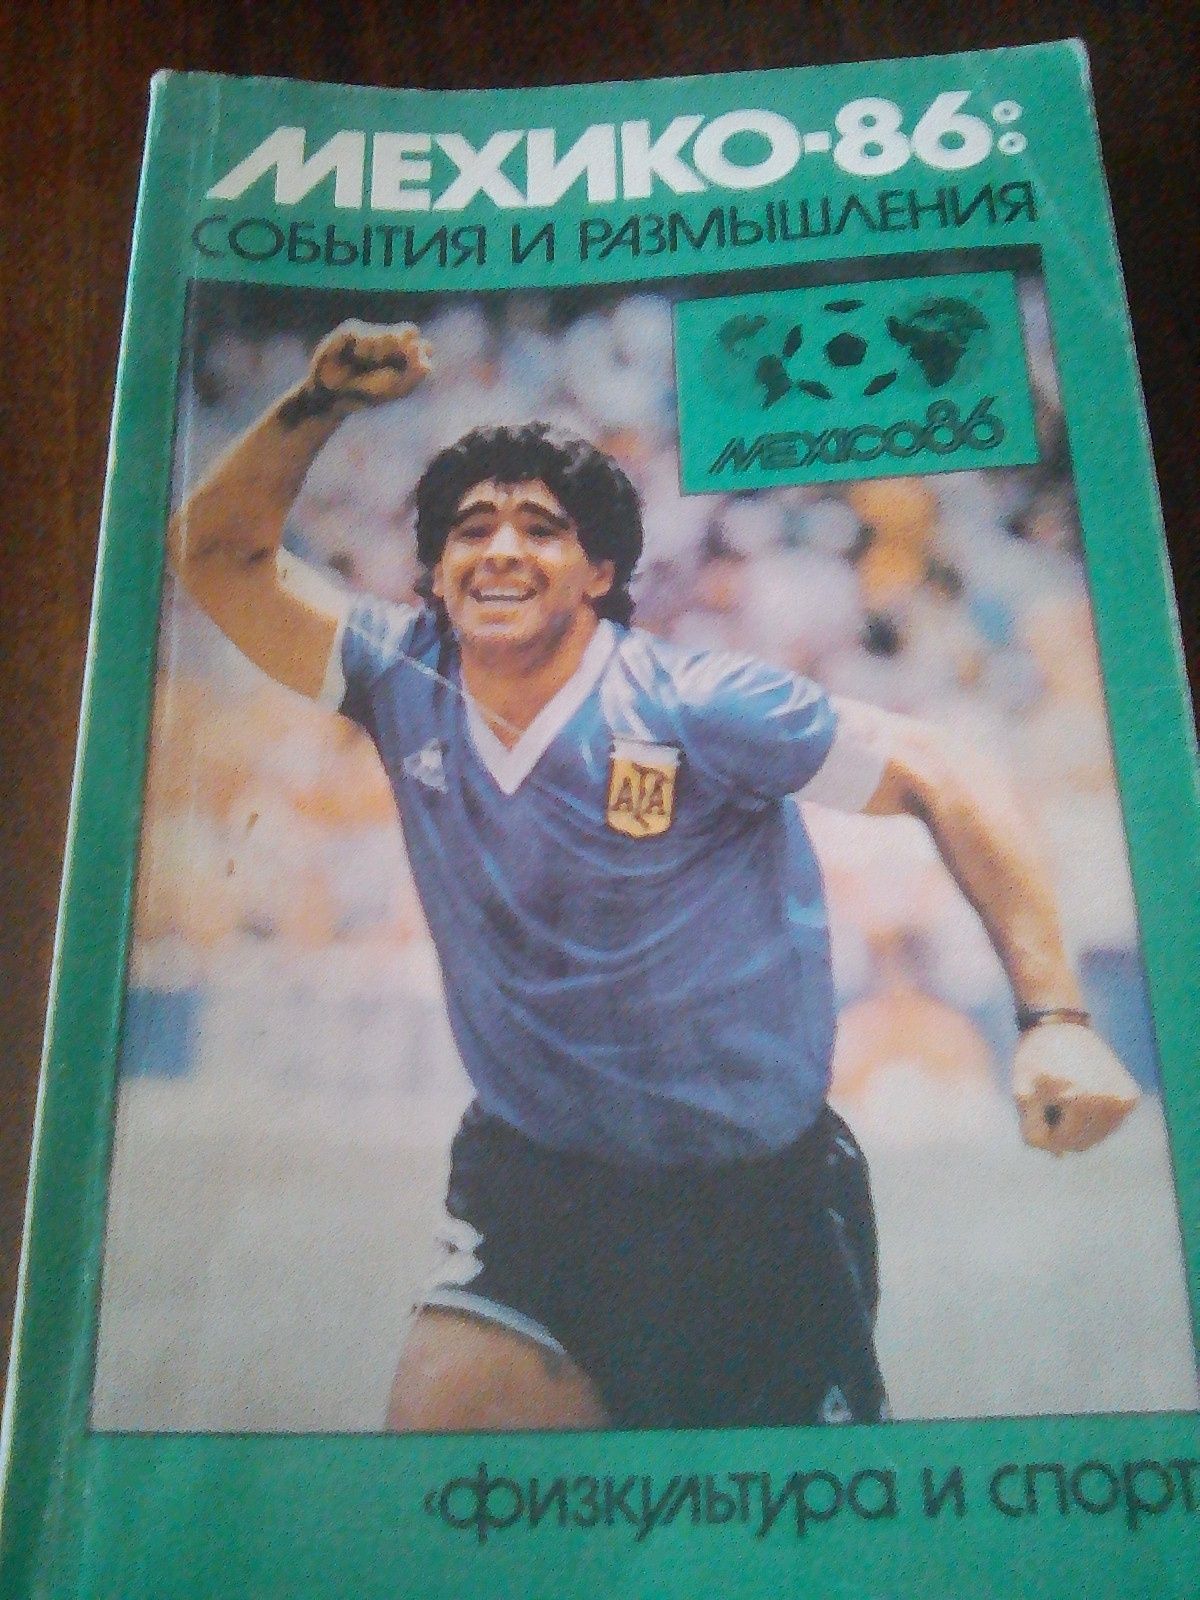 Мехико, - 86. Книги о футболе.